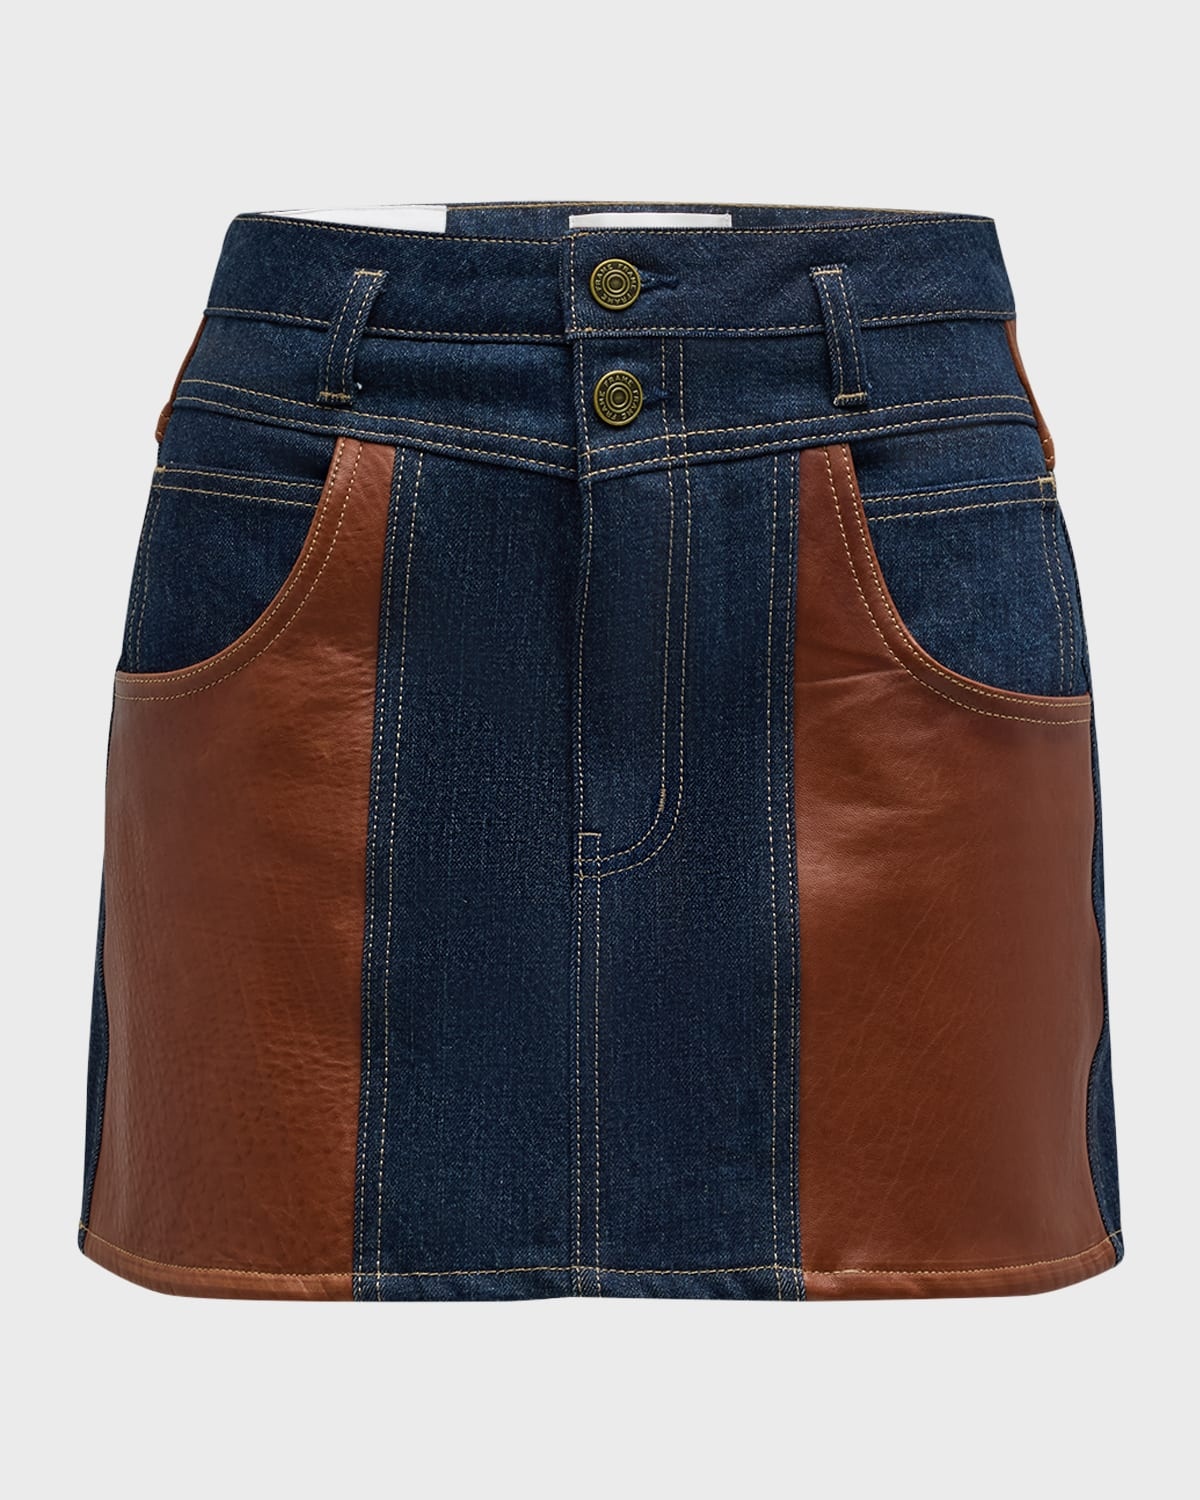 Atelier Denim and Leather Mini Skirt - 1